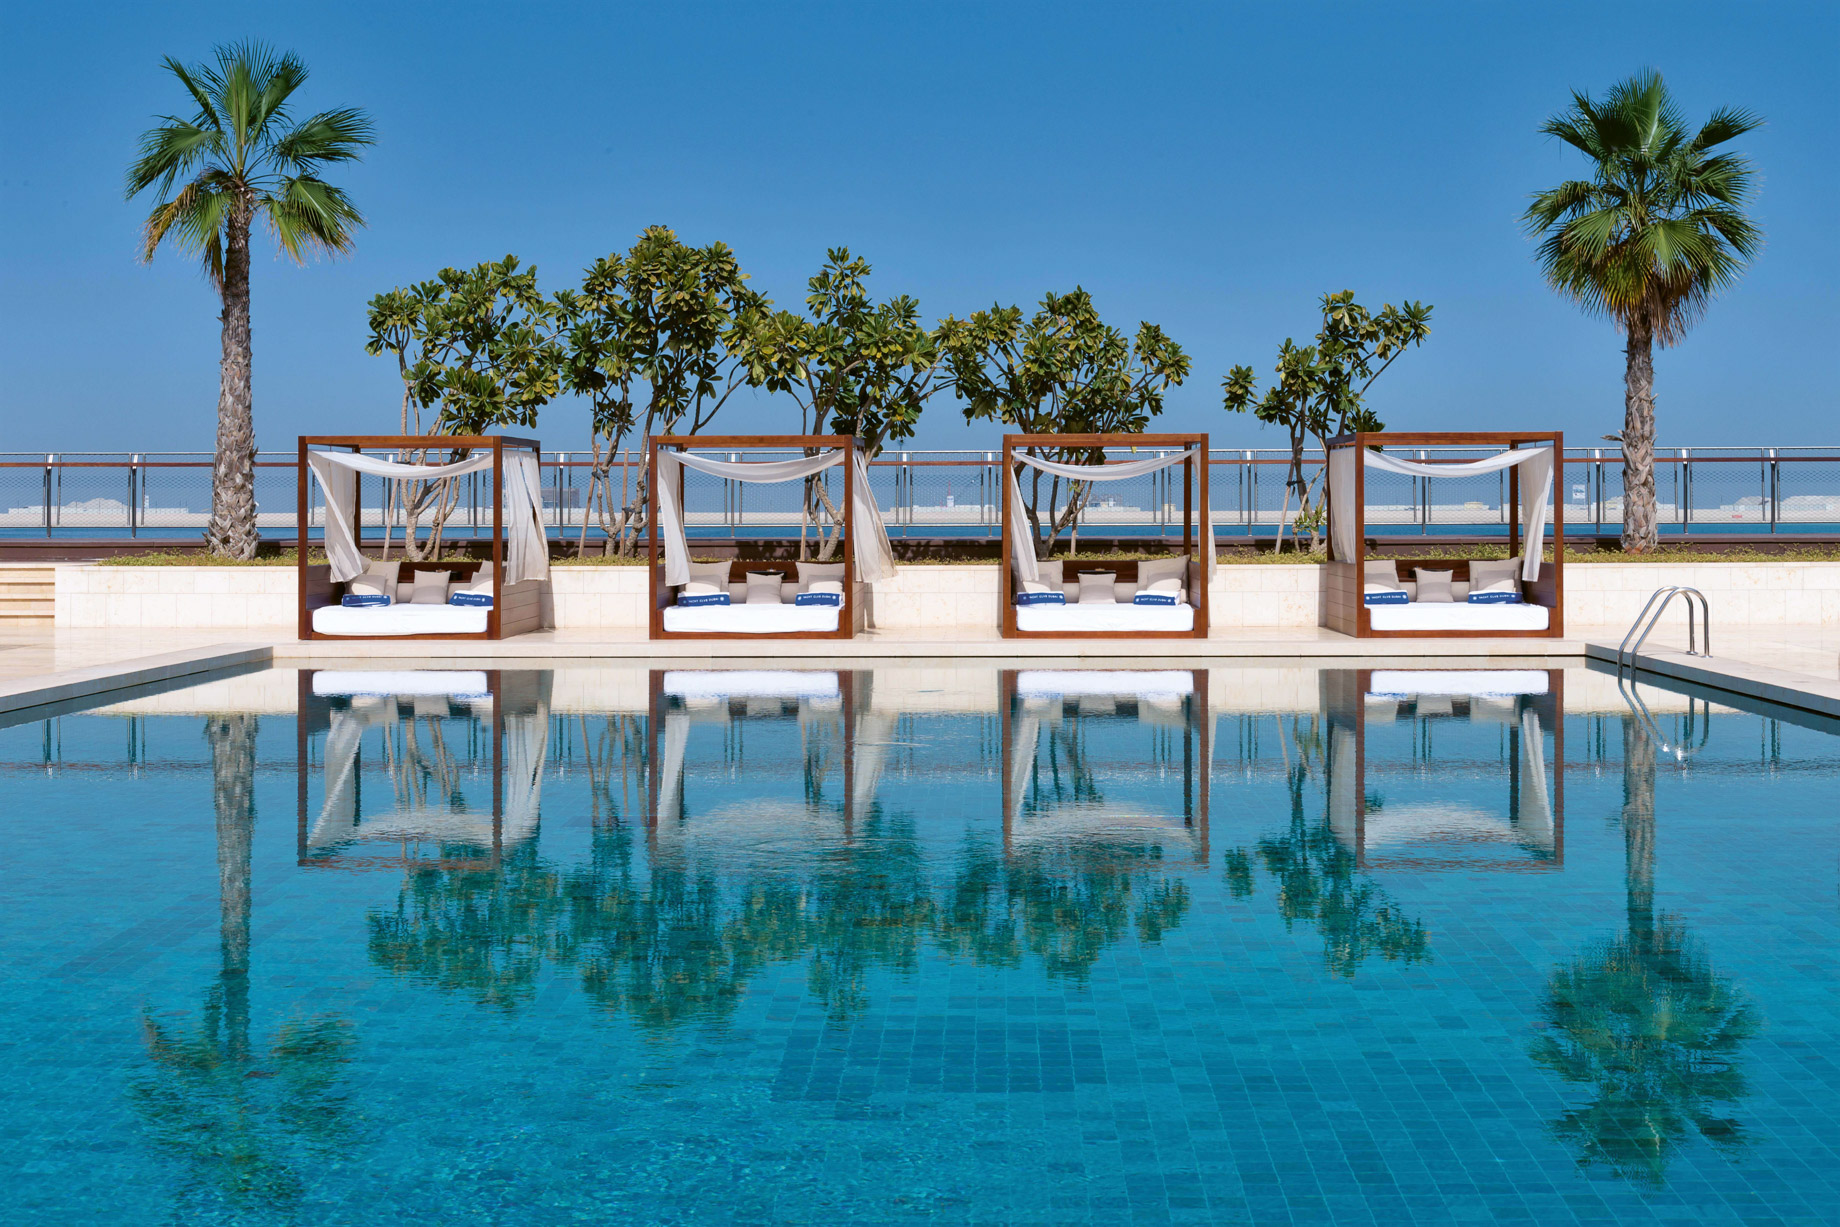 Bvlgari Resort Dubai – Jumeira Bay Island, Dubai, UAE – Bvlgari Yacht Club Poolside Cabanas